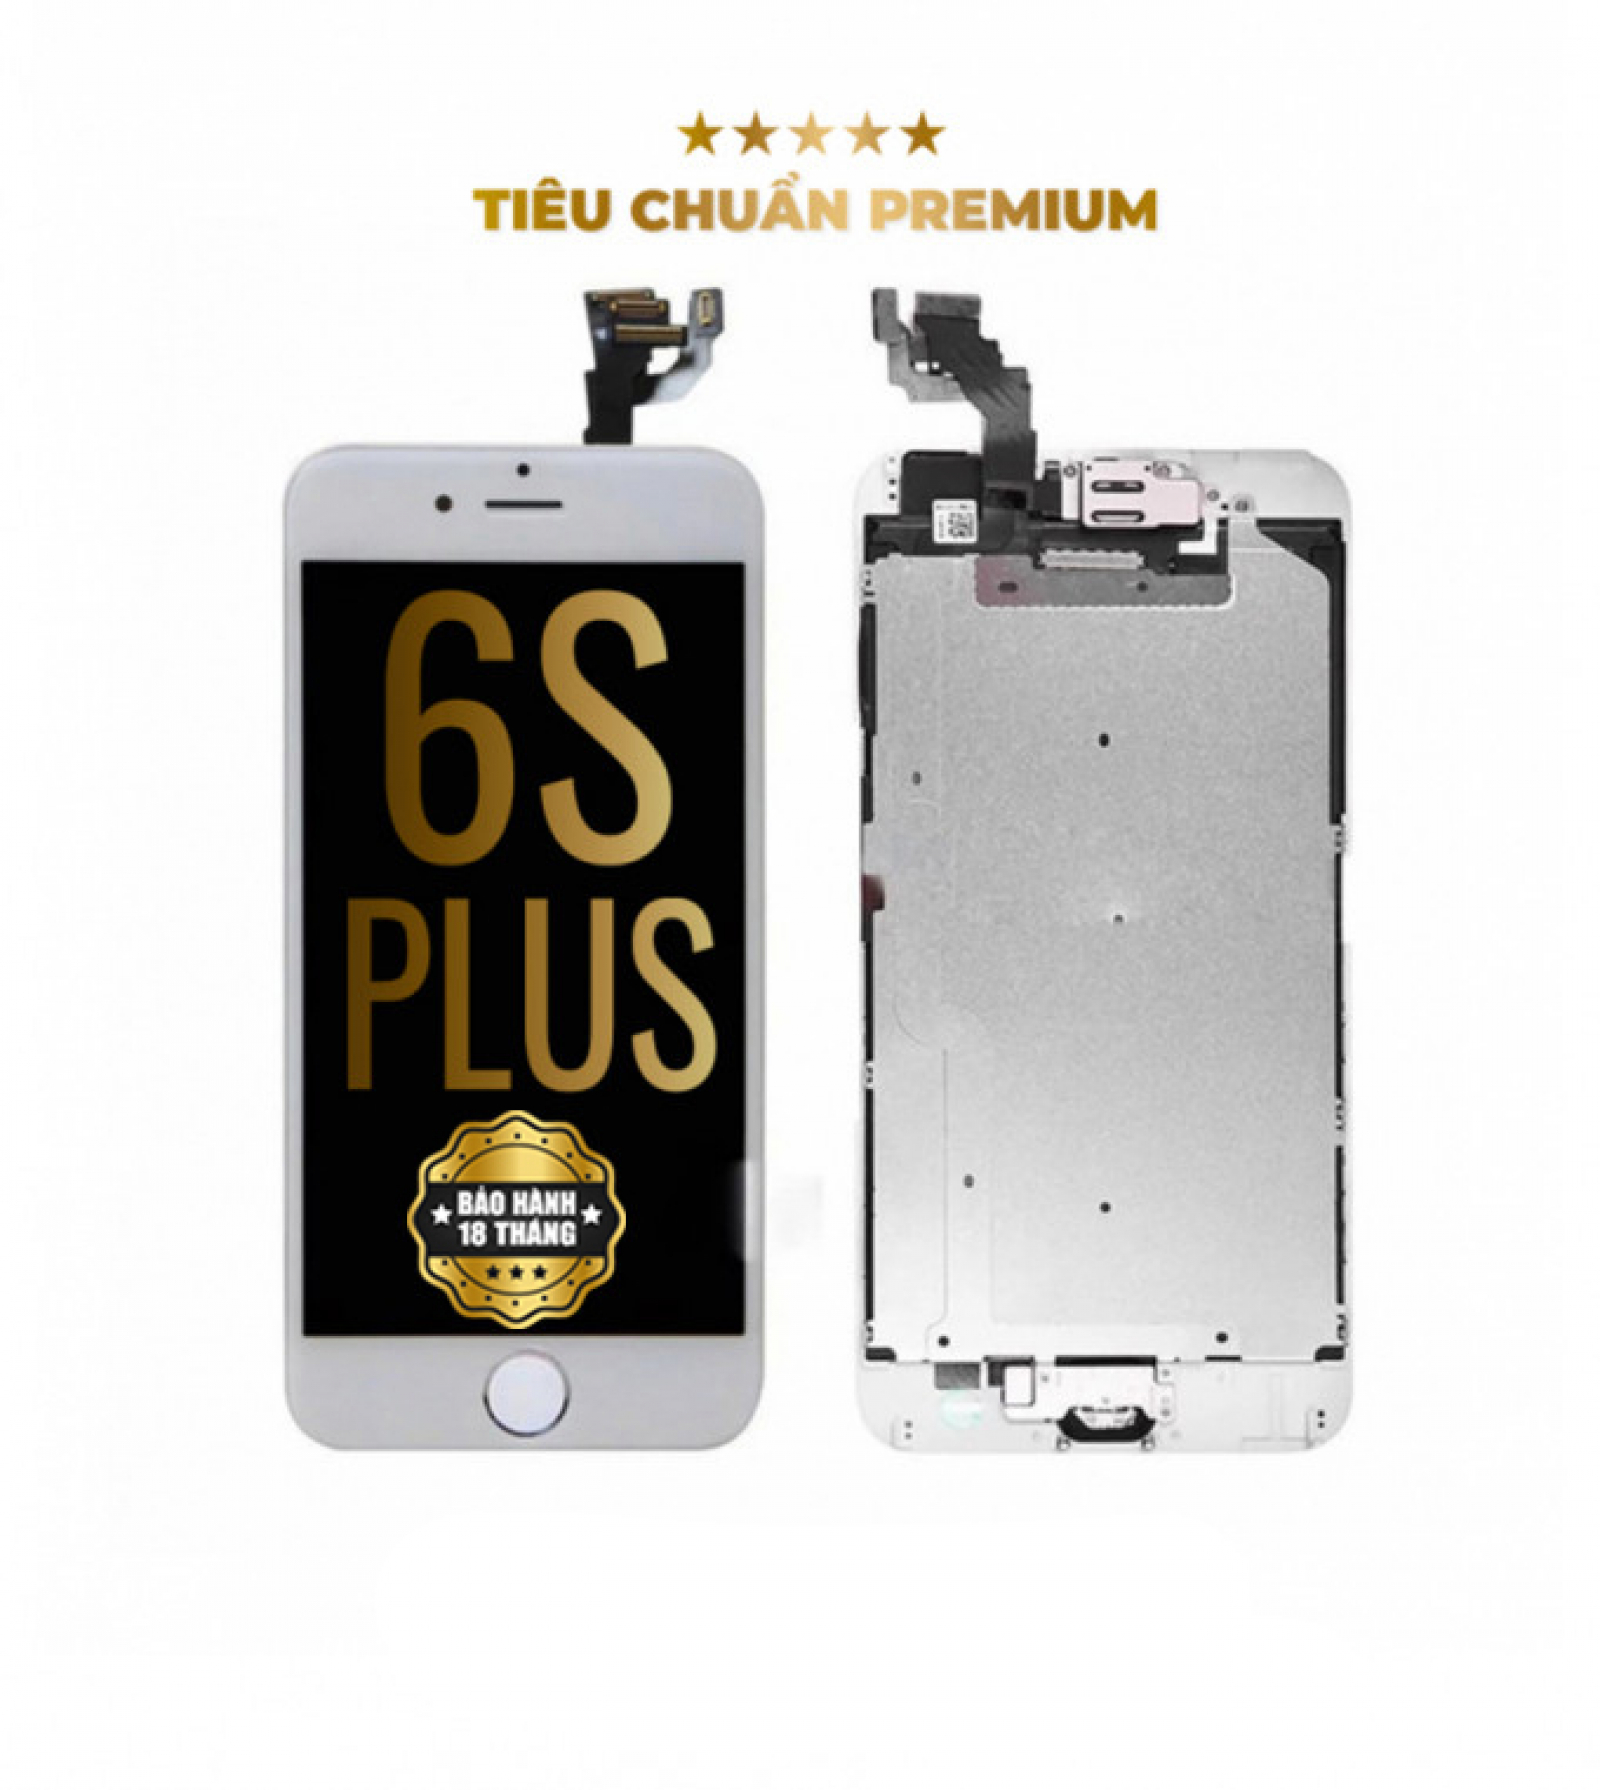 iPhone 6s Plus Quốc tế 99% - Stylemobile.vn